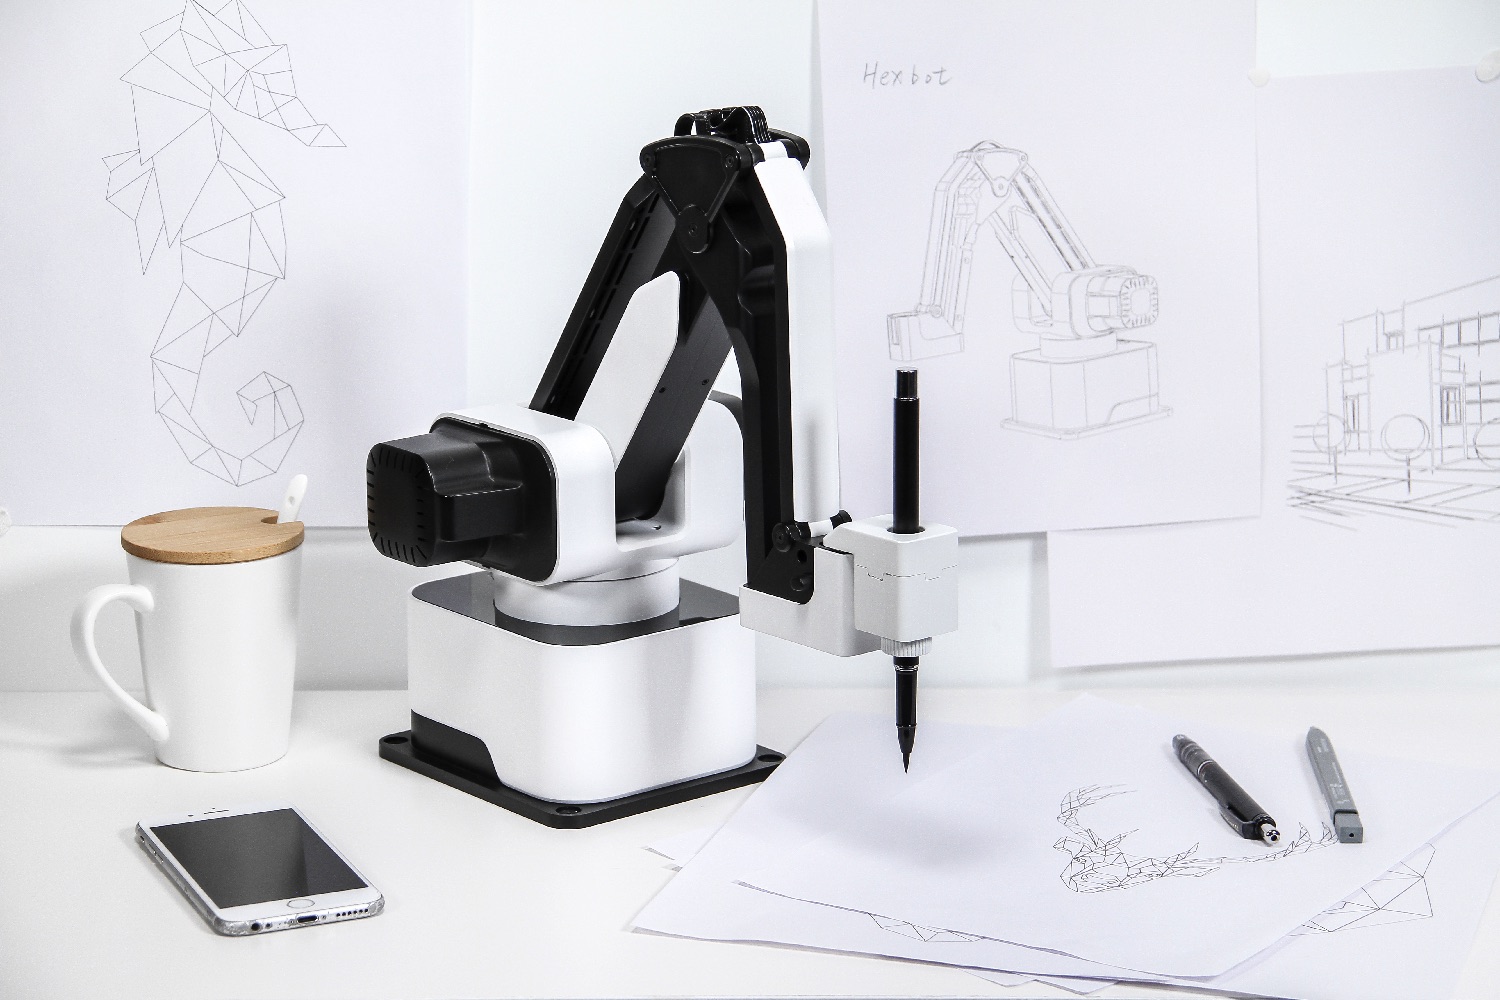 hexbot robot arm kickstarter img 9395